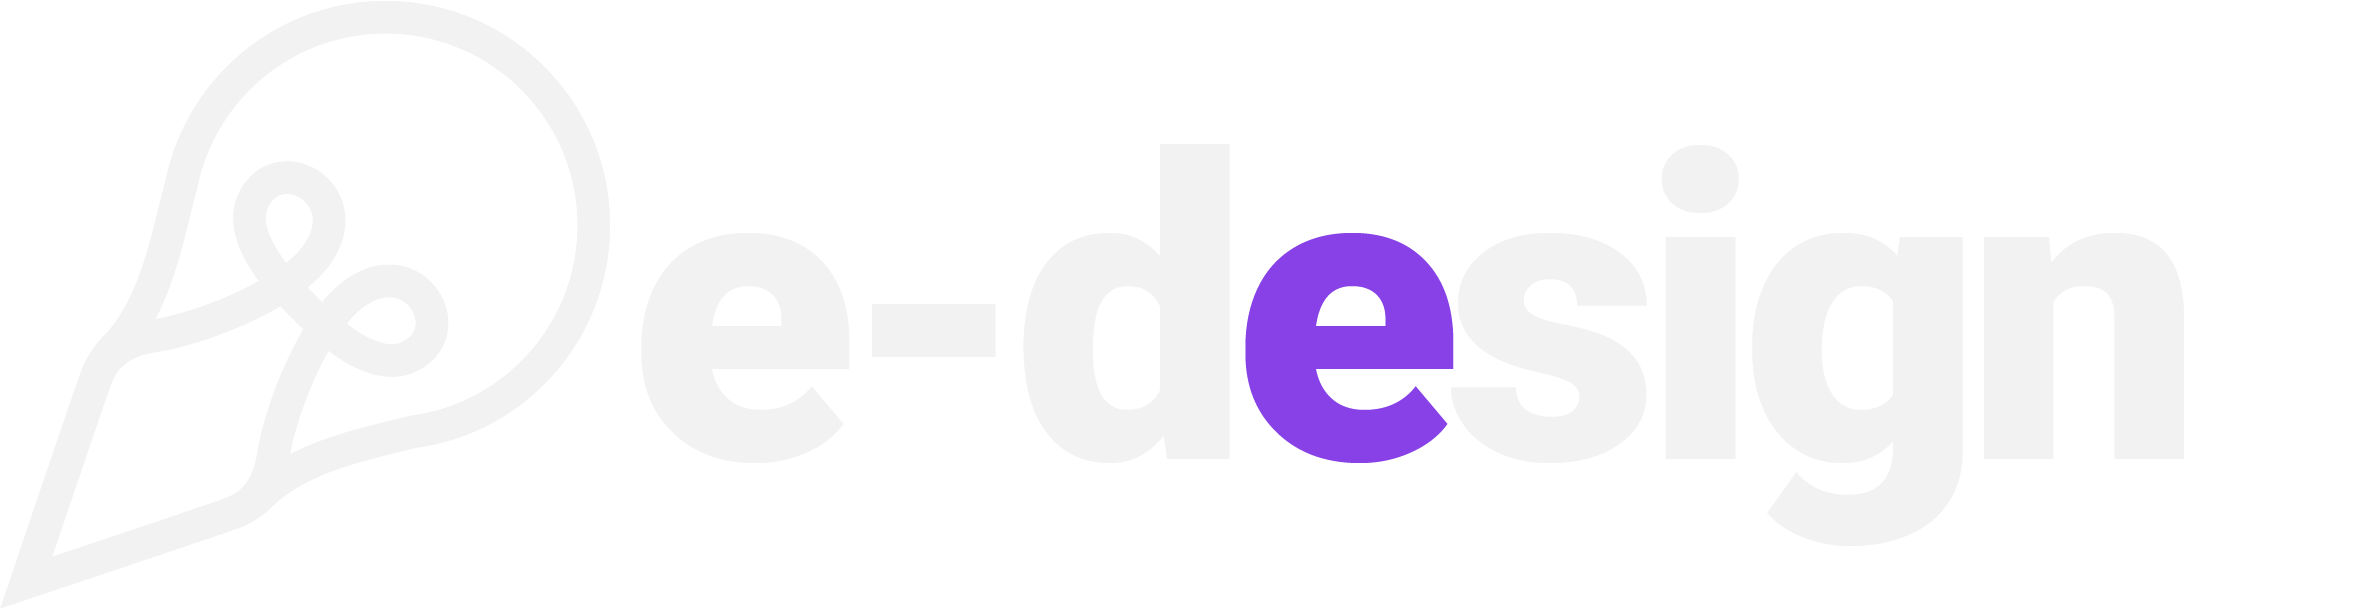 E-Design logo